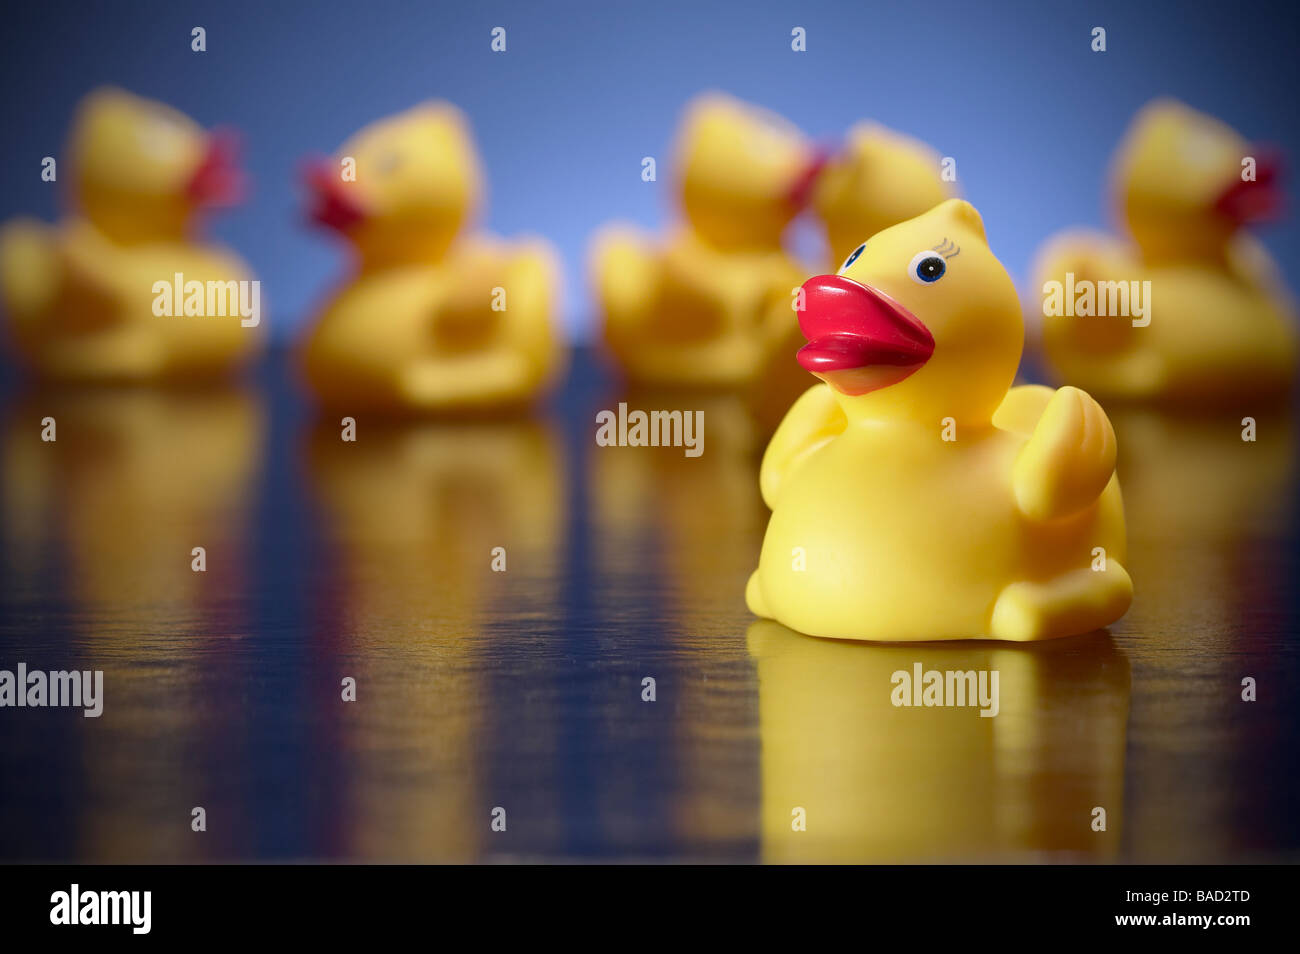 Toy Rubber Ducks Stock Photo